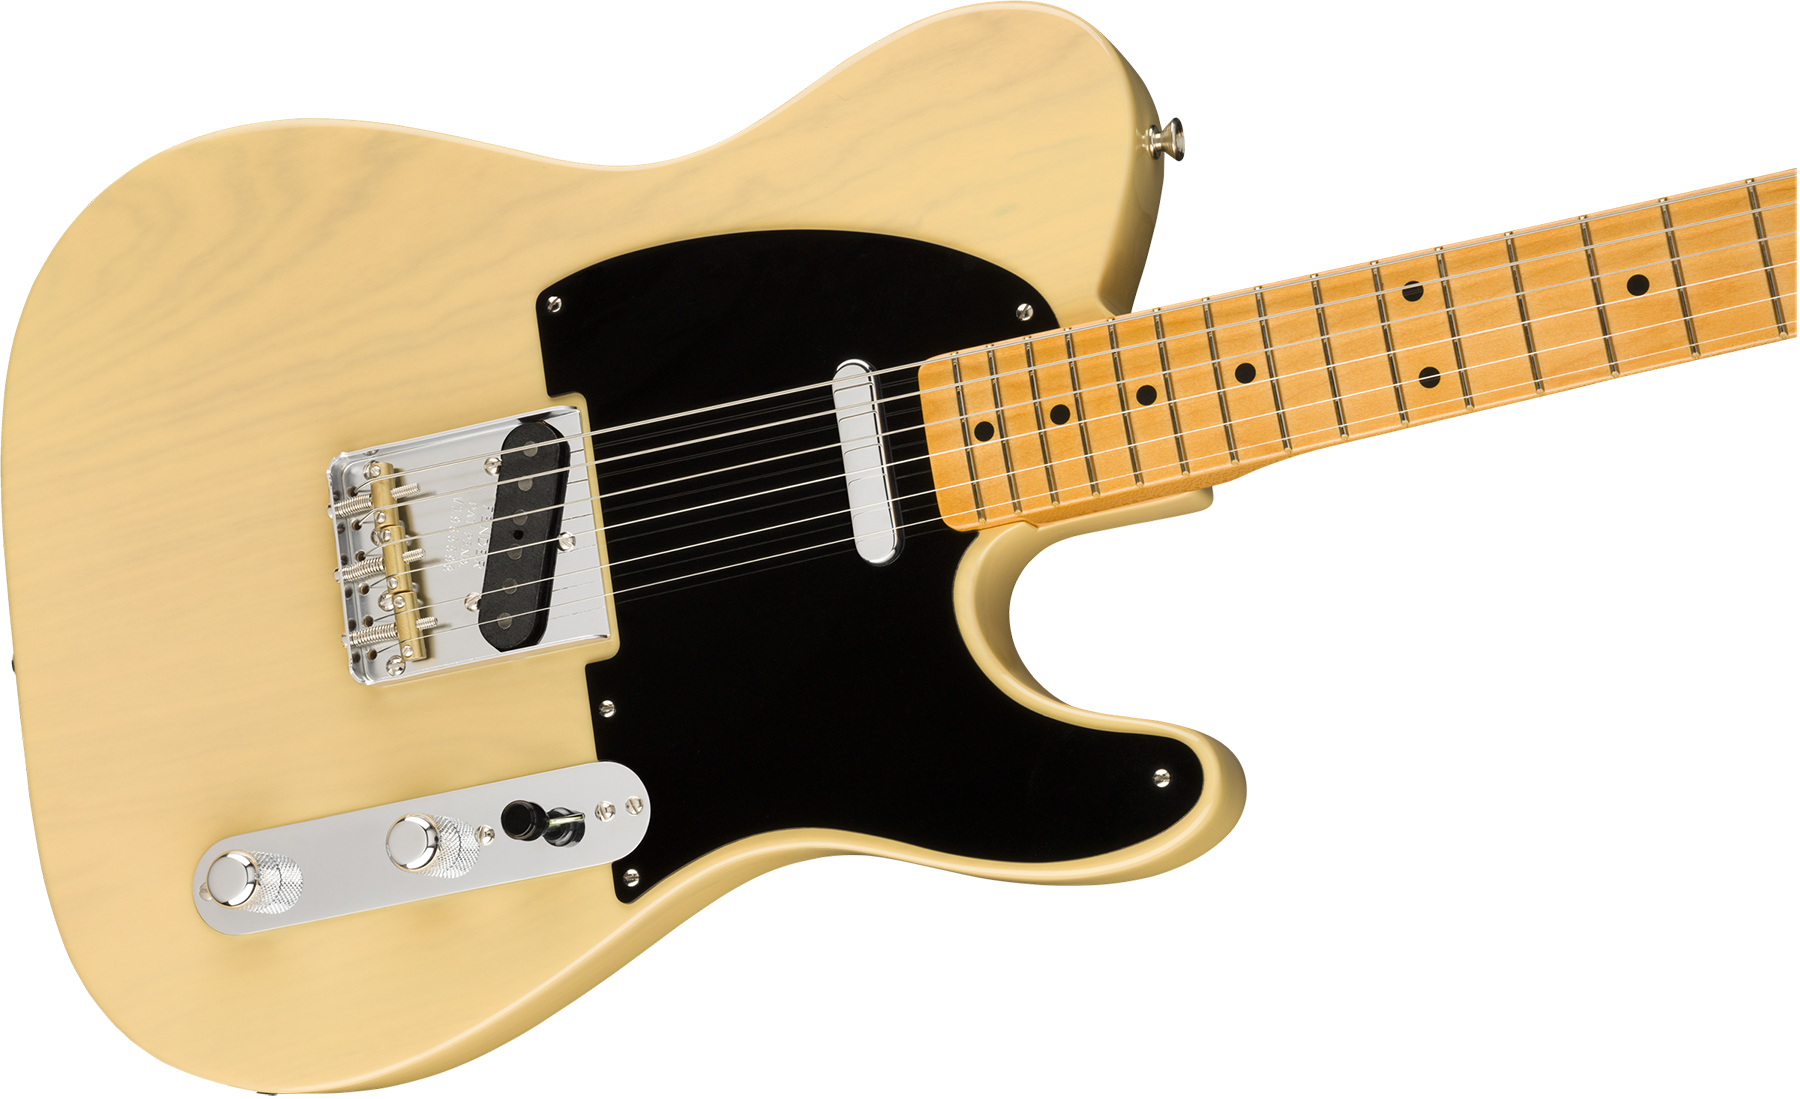 Fender Tele Broadcaster 70th Anniversary Usa Mn - Blackguard Blonde - Guitarra eléctrica con forma de tel - Variation 2